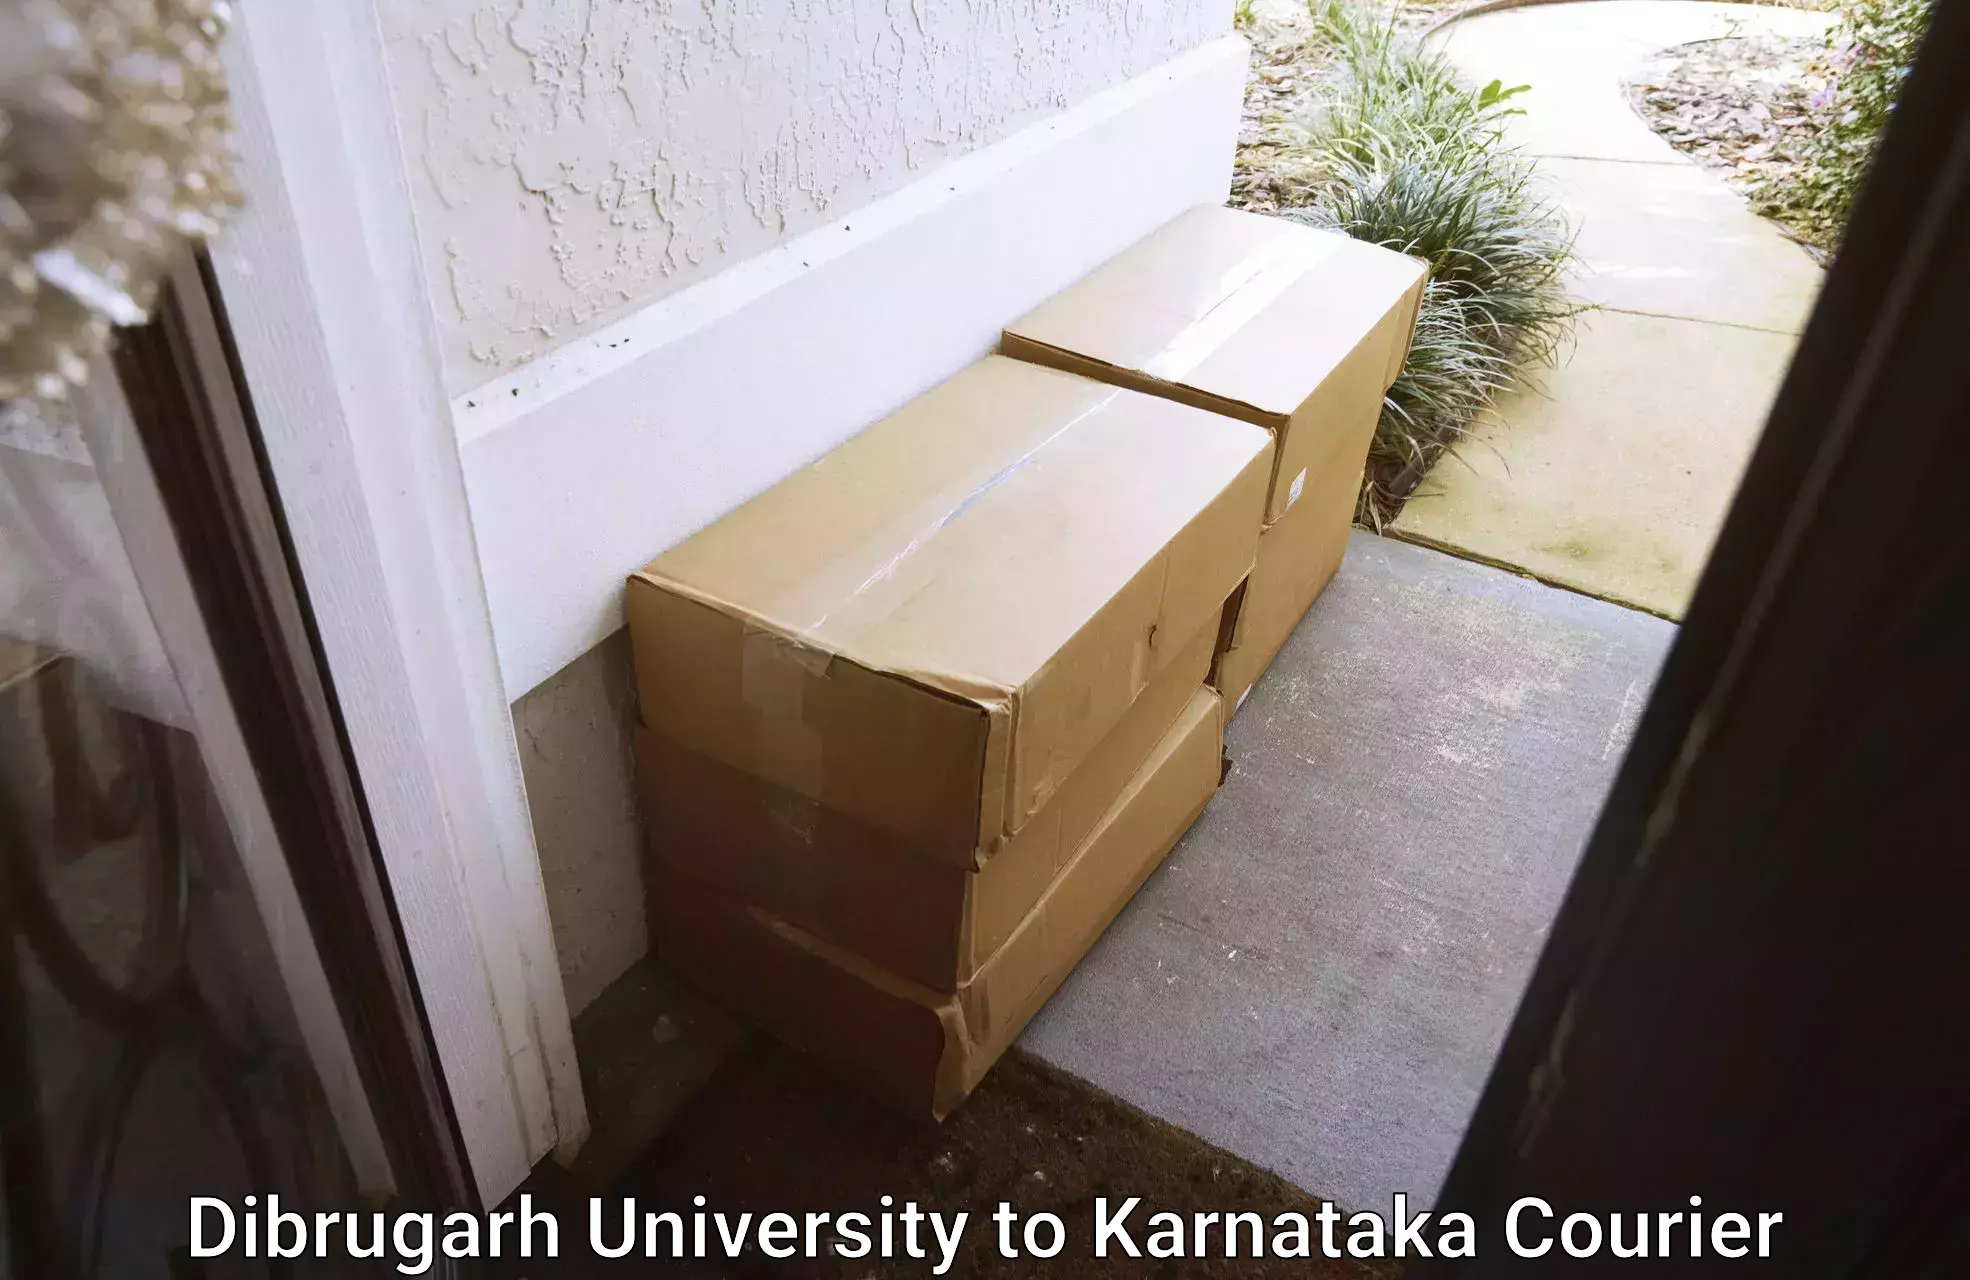 Global courier networks Dibrugarh University to Karnataka